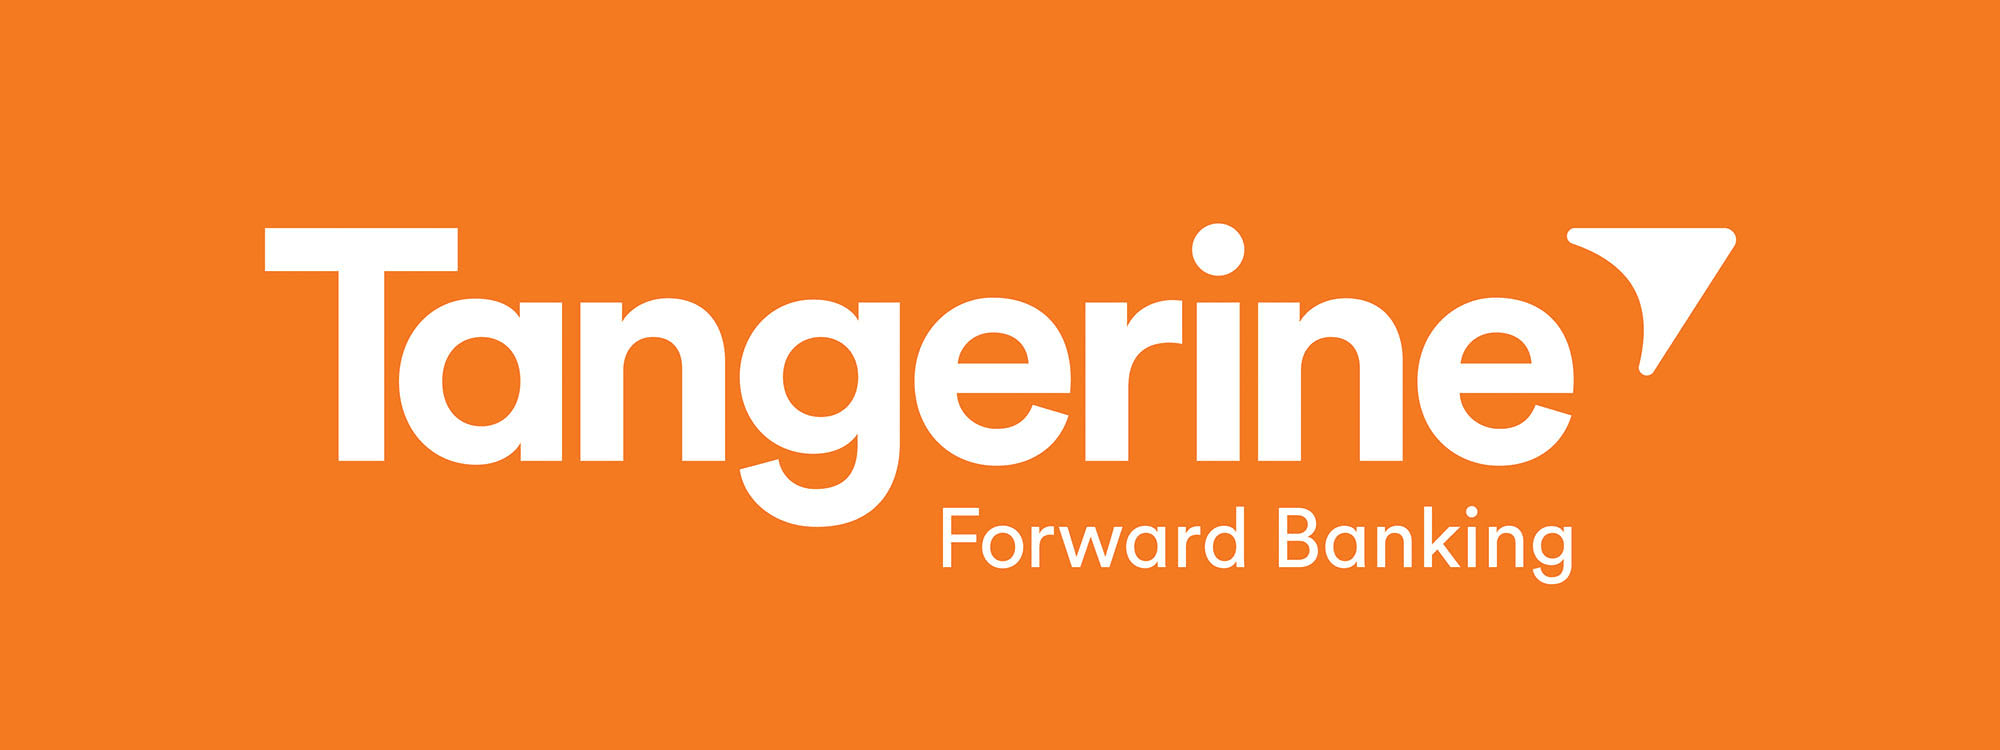 Tangerine Logo - Tangerine Money Back Credit Card Takes Home Awards